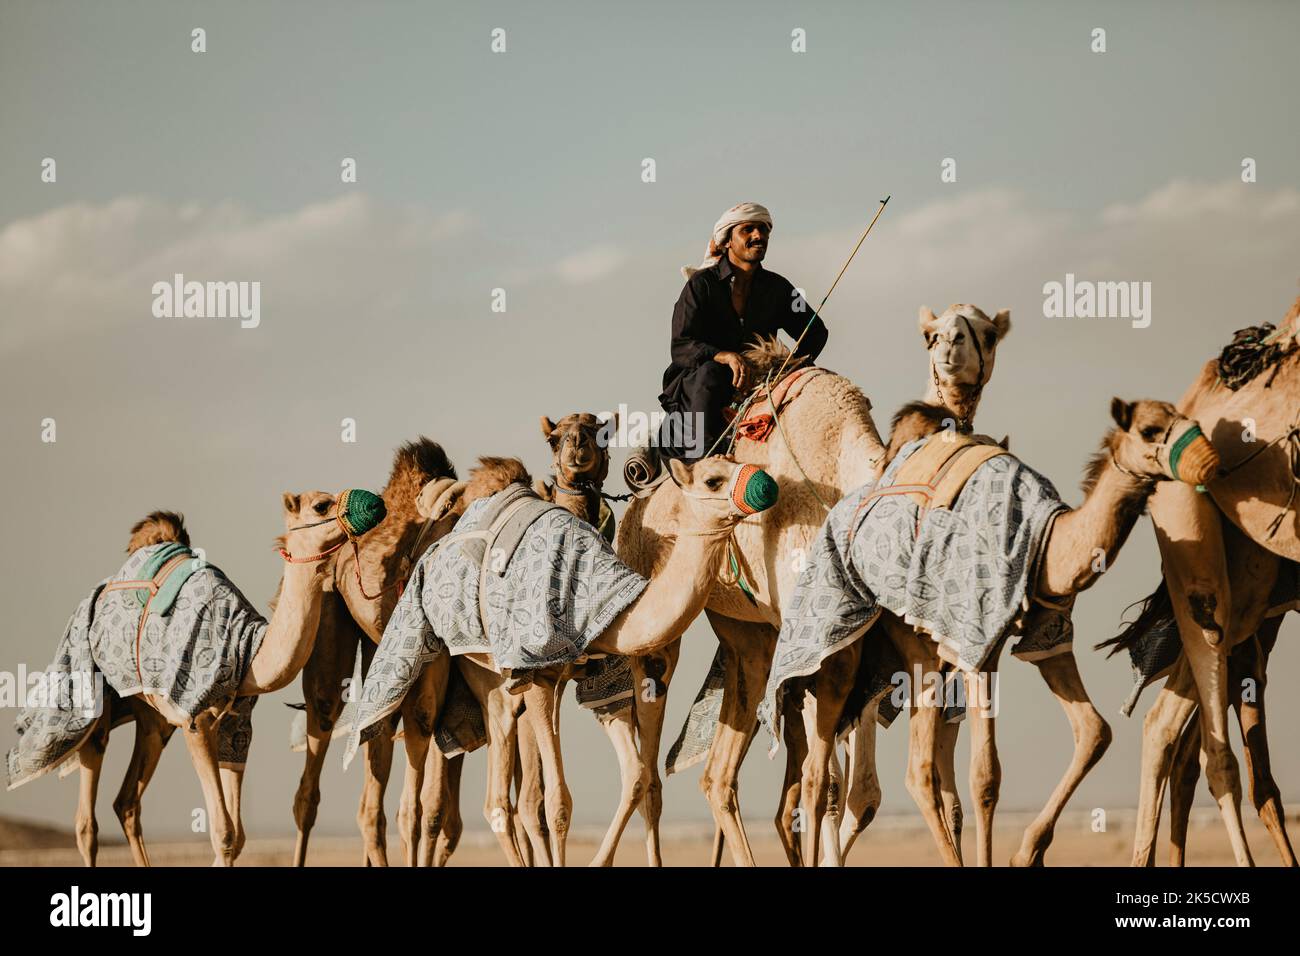 Saudi Arabia, Mecca province, Jeddah/Jeddah, camel driver Stock Photo